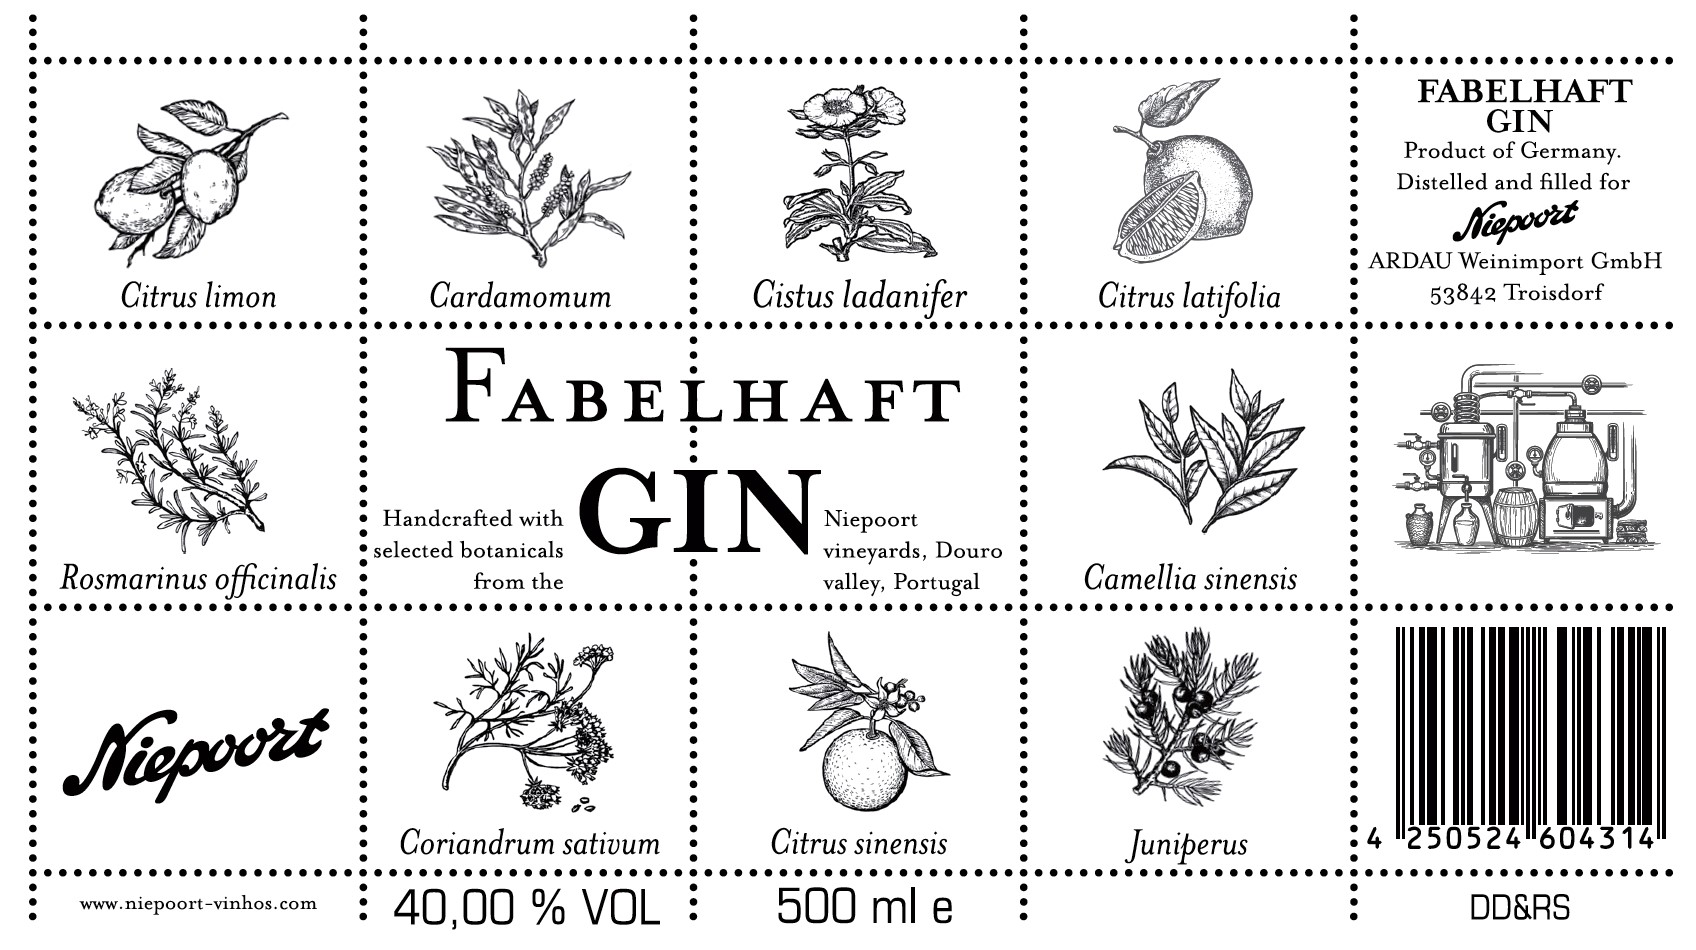 Fabelhaft Gin Niepoort 0,5 l » 2010 Vin & Velsmag